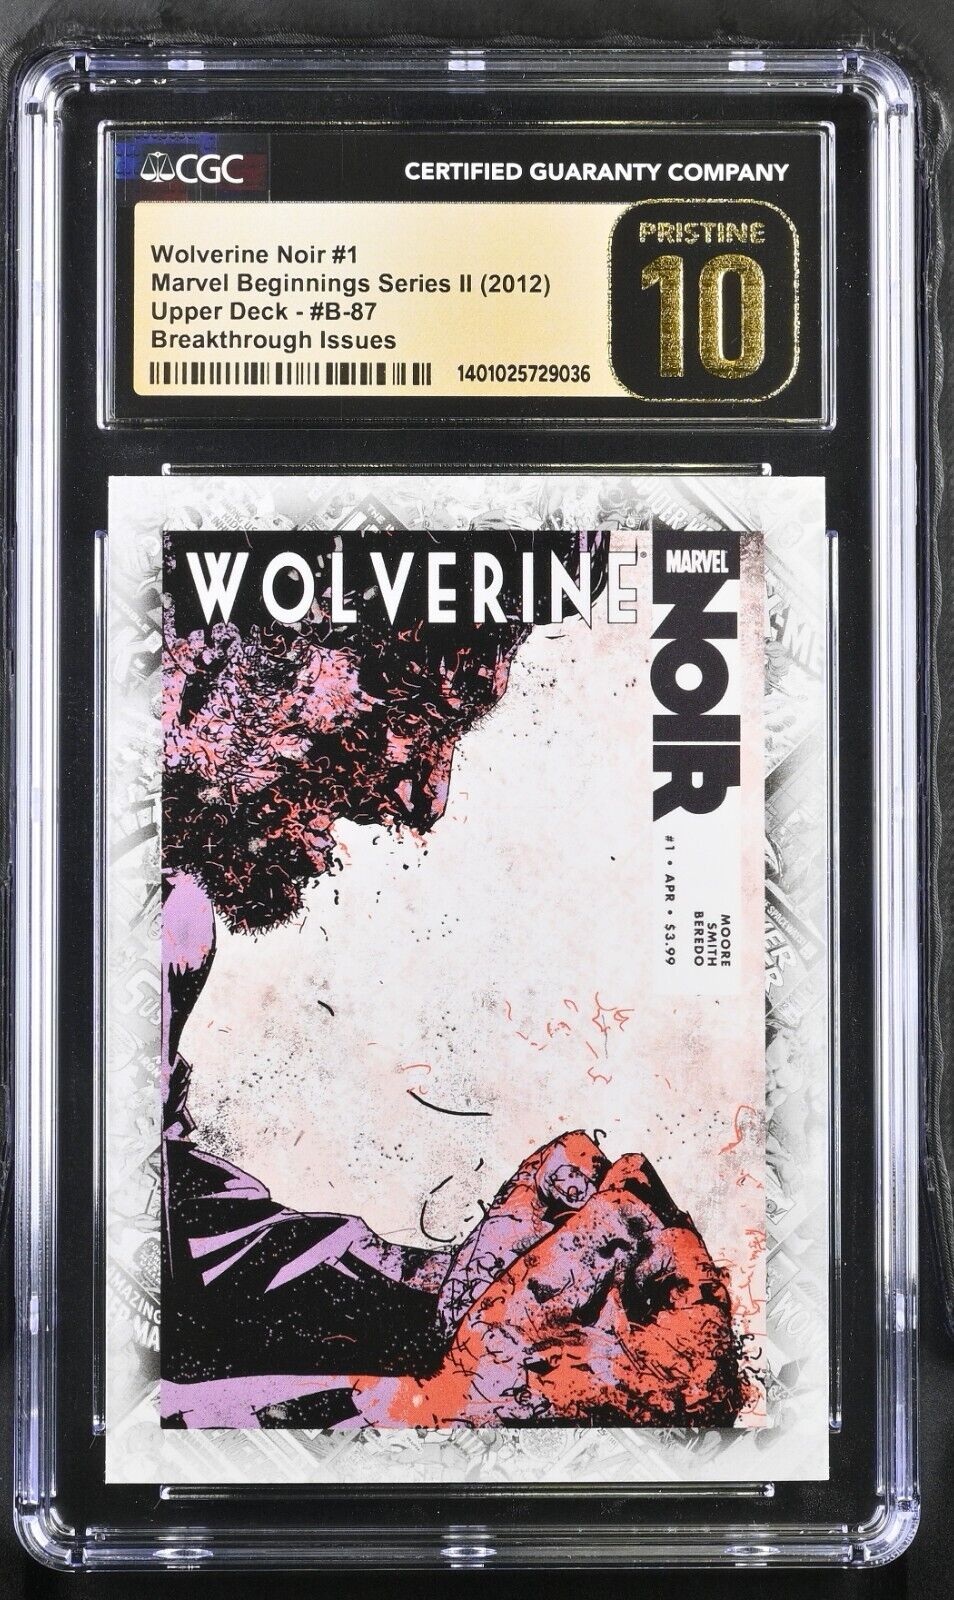 2012 Marvel Beginnings Series 2 Breakthrough Wolverine Noir #1 CGC Pristine 10